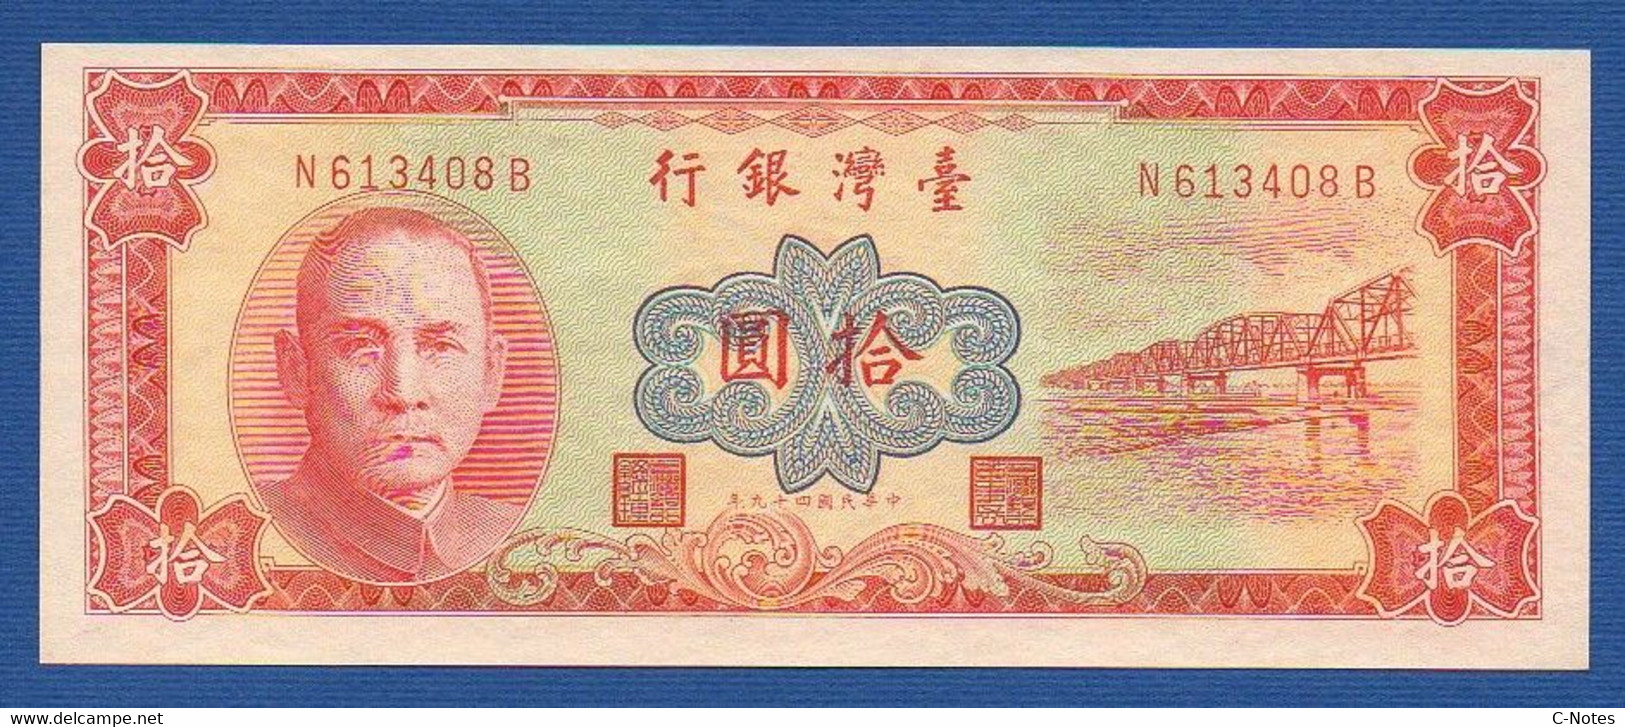 CHINA - TAIWAN - P.1970 – 10 Yuan 1960 UNC, Serie N 613408 B - Taiwan